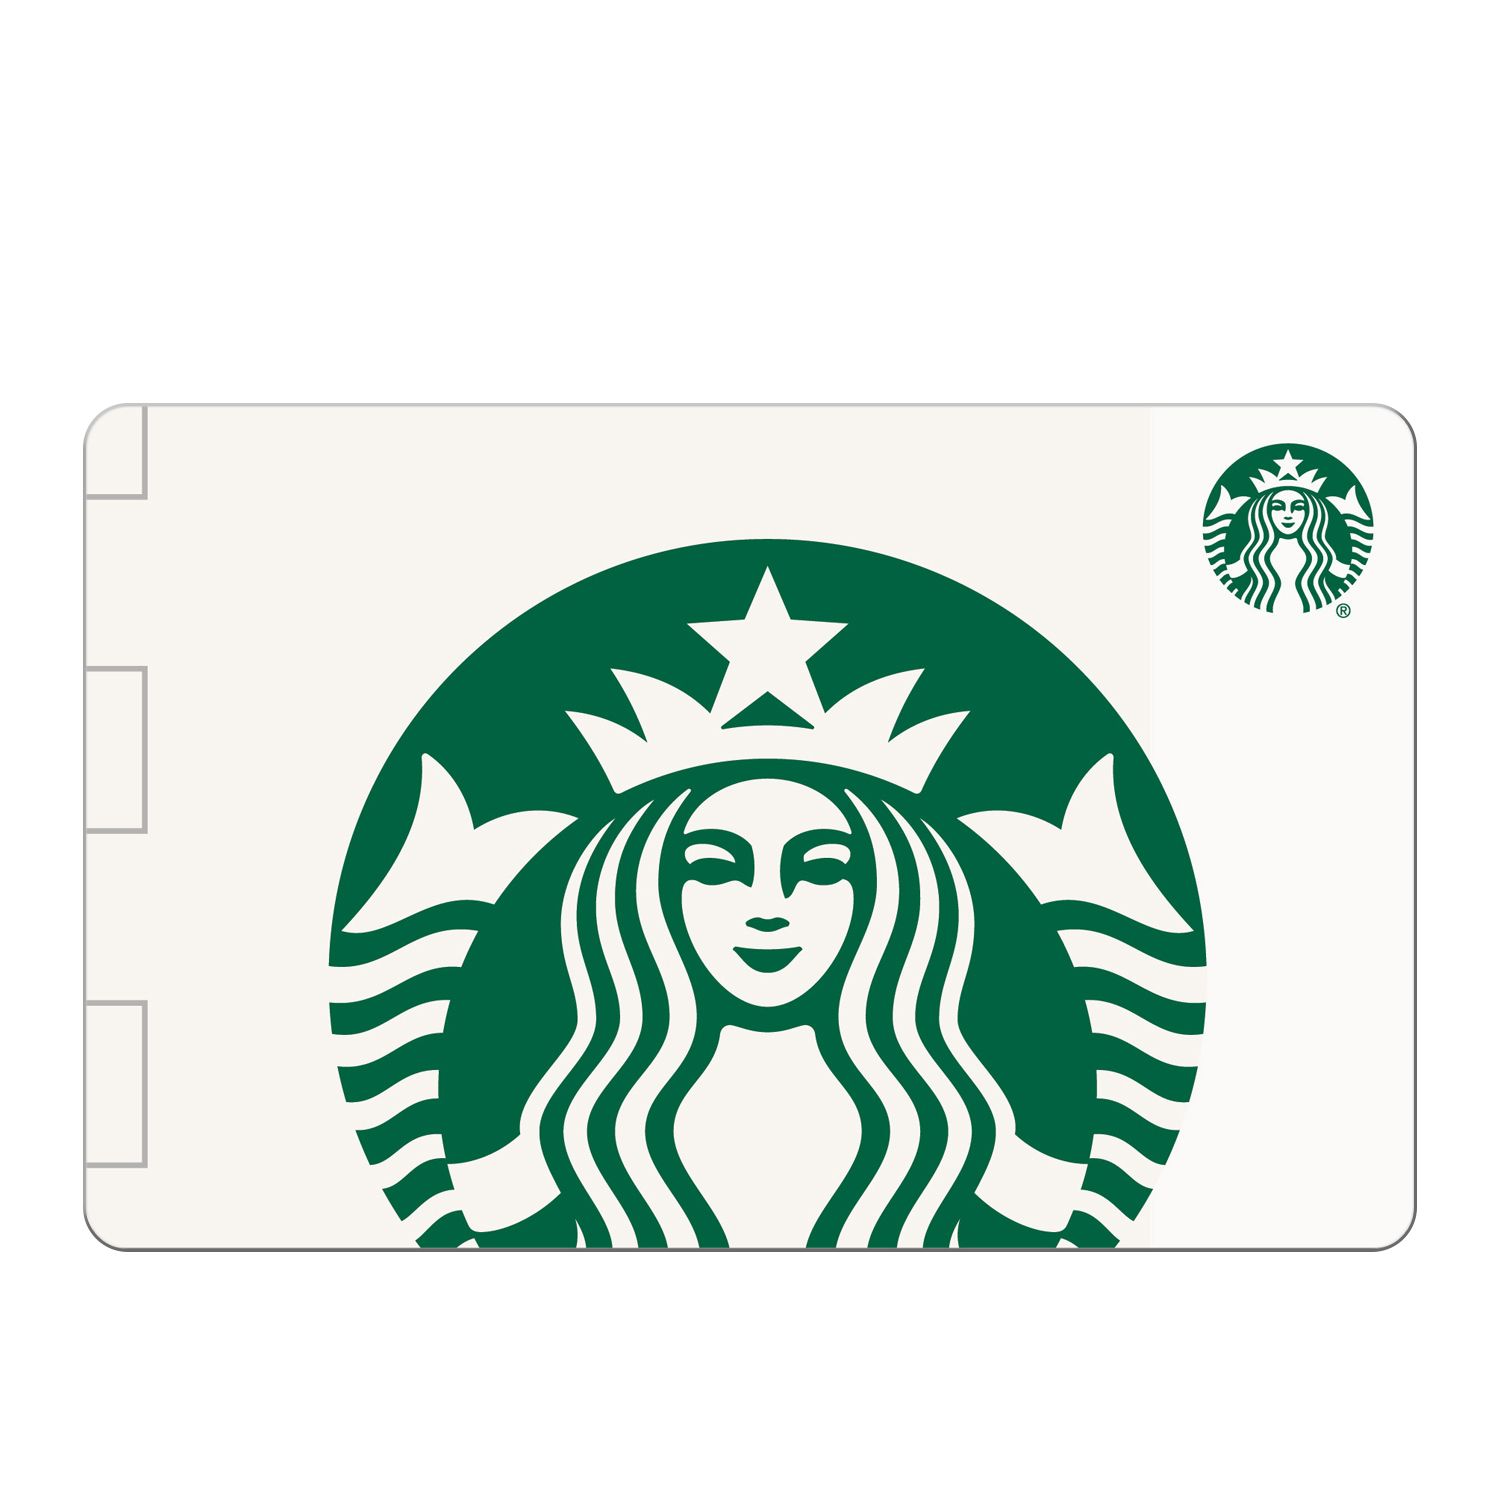 10 Starbucks Gift Card 3 Pk Bjs Wholesale Club